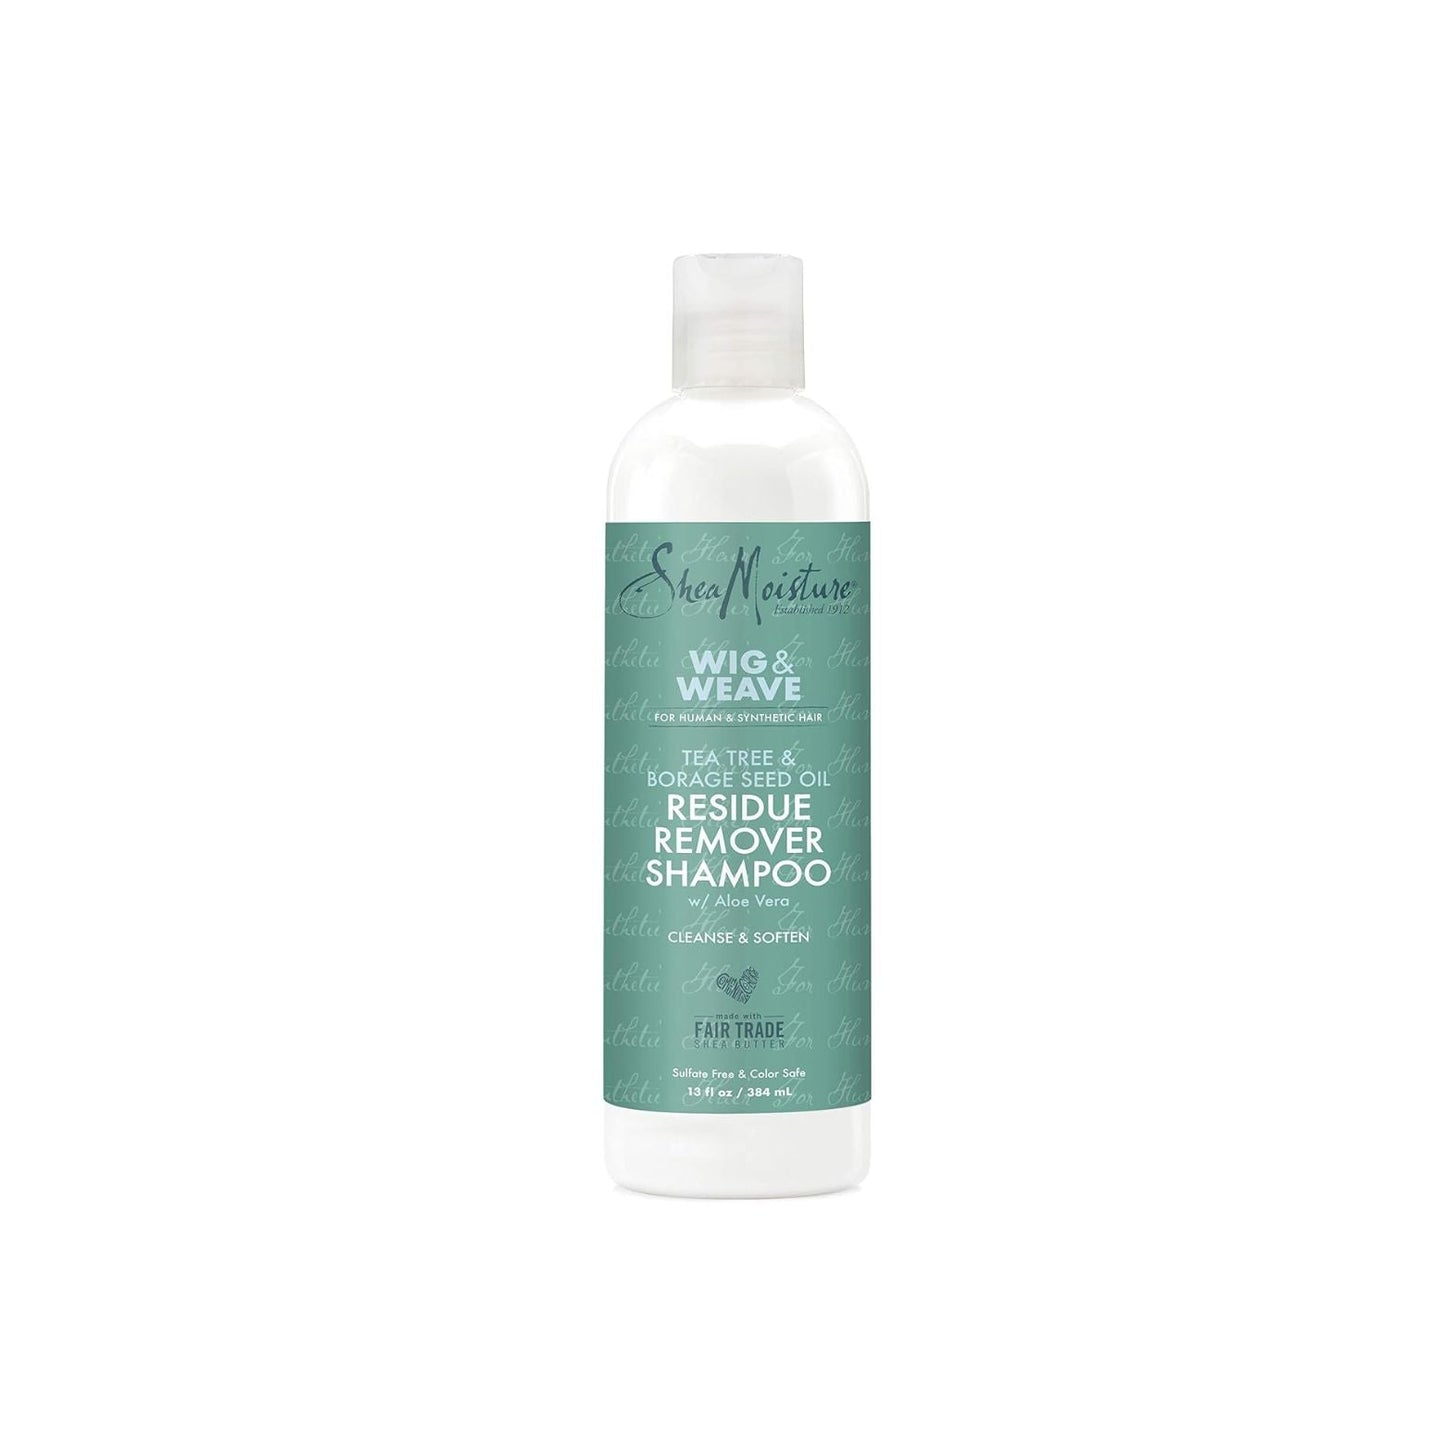 SheaMoisture Wig & Weave Residue Remover Shampoo 384 ml - Kuituhiukset.fi